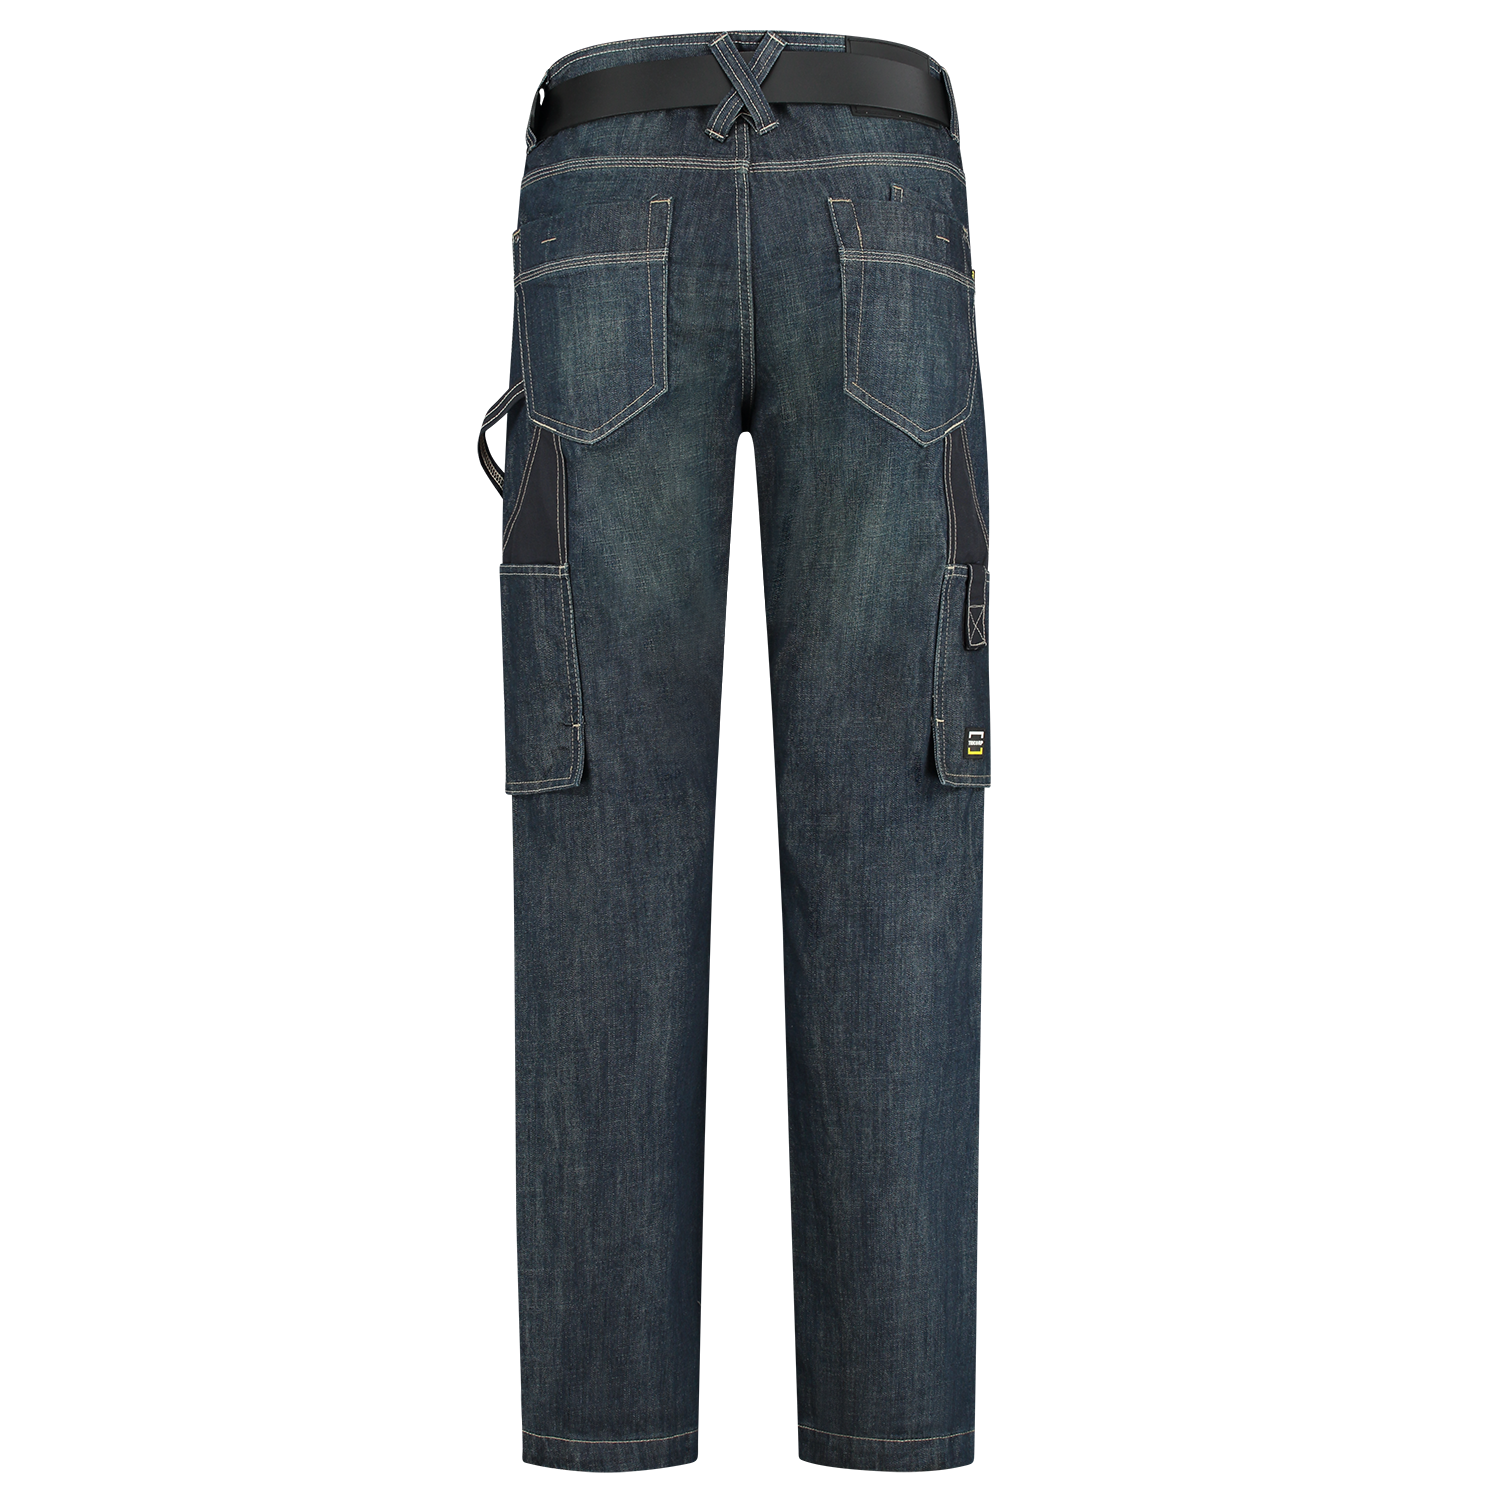 Jeans work pants